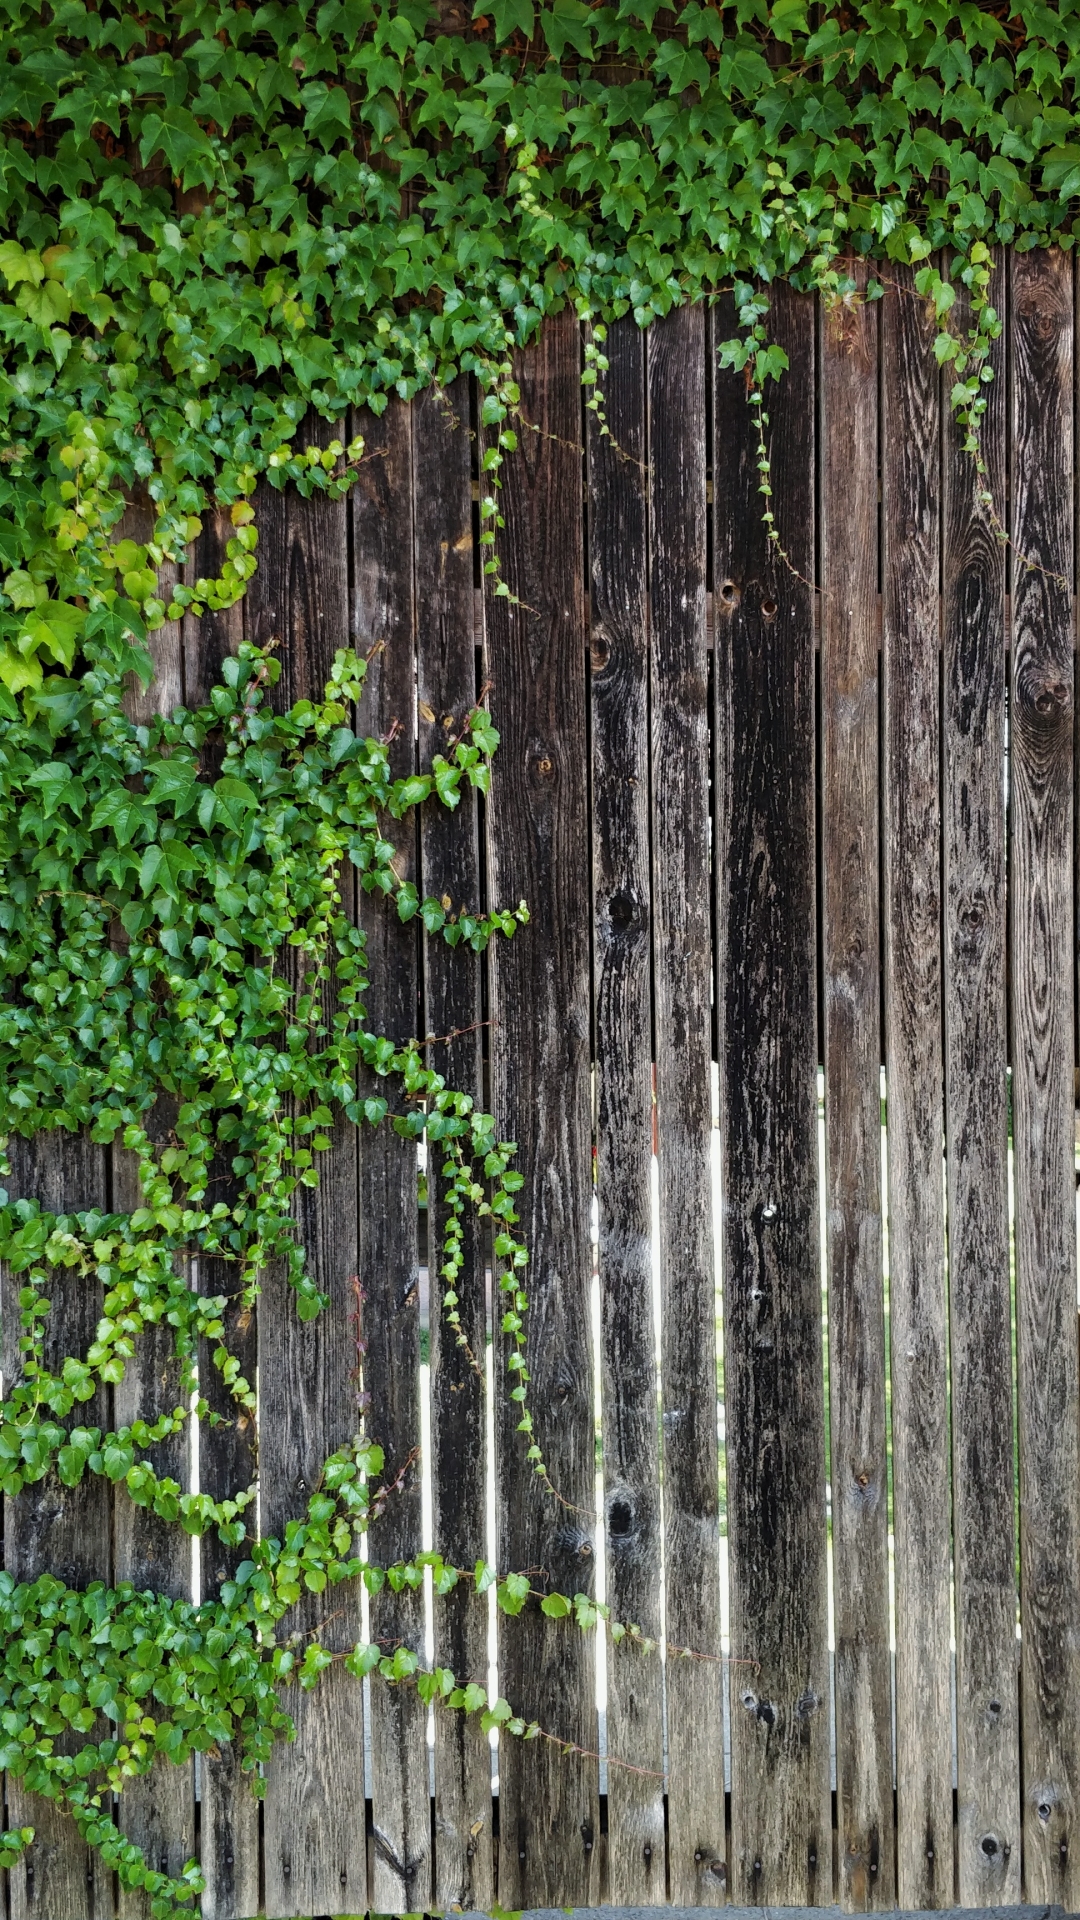 samsung j7 wallpaper,vegetation,green,tree,plant,fence